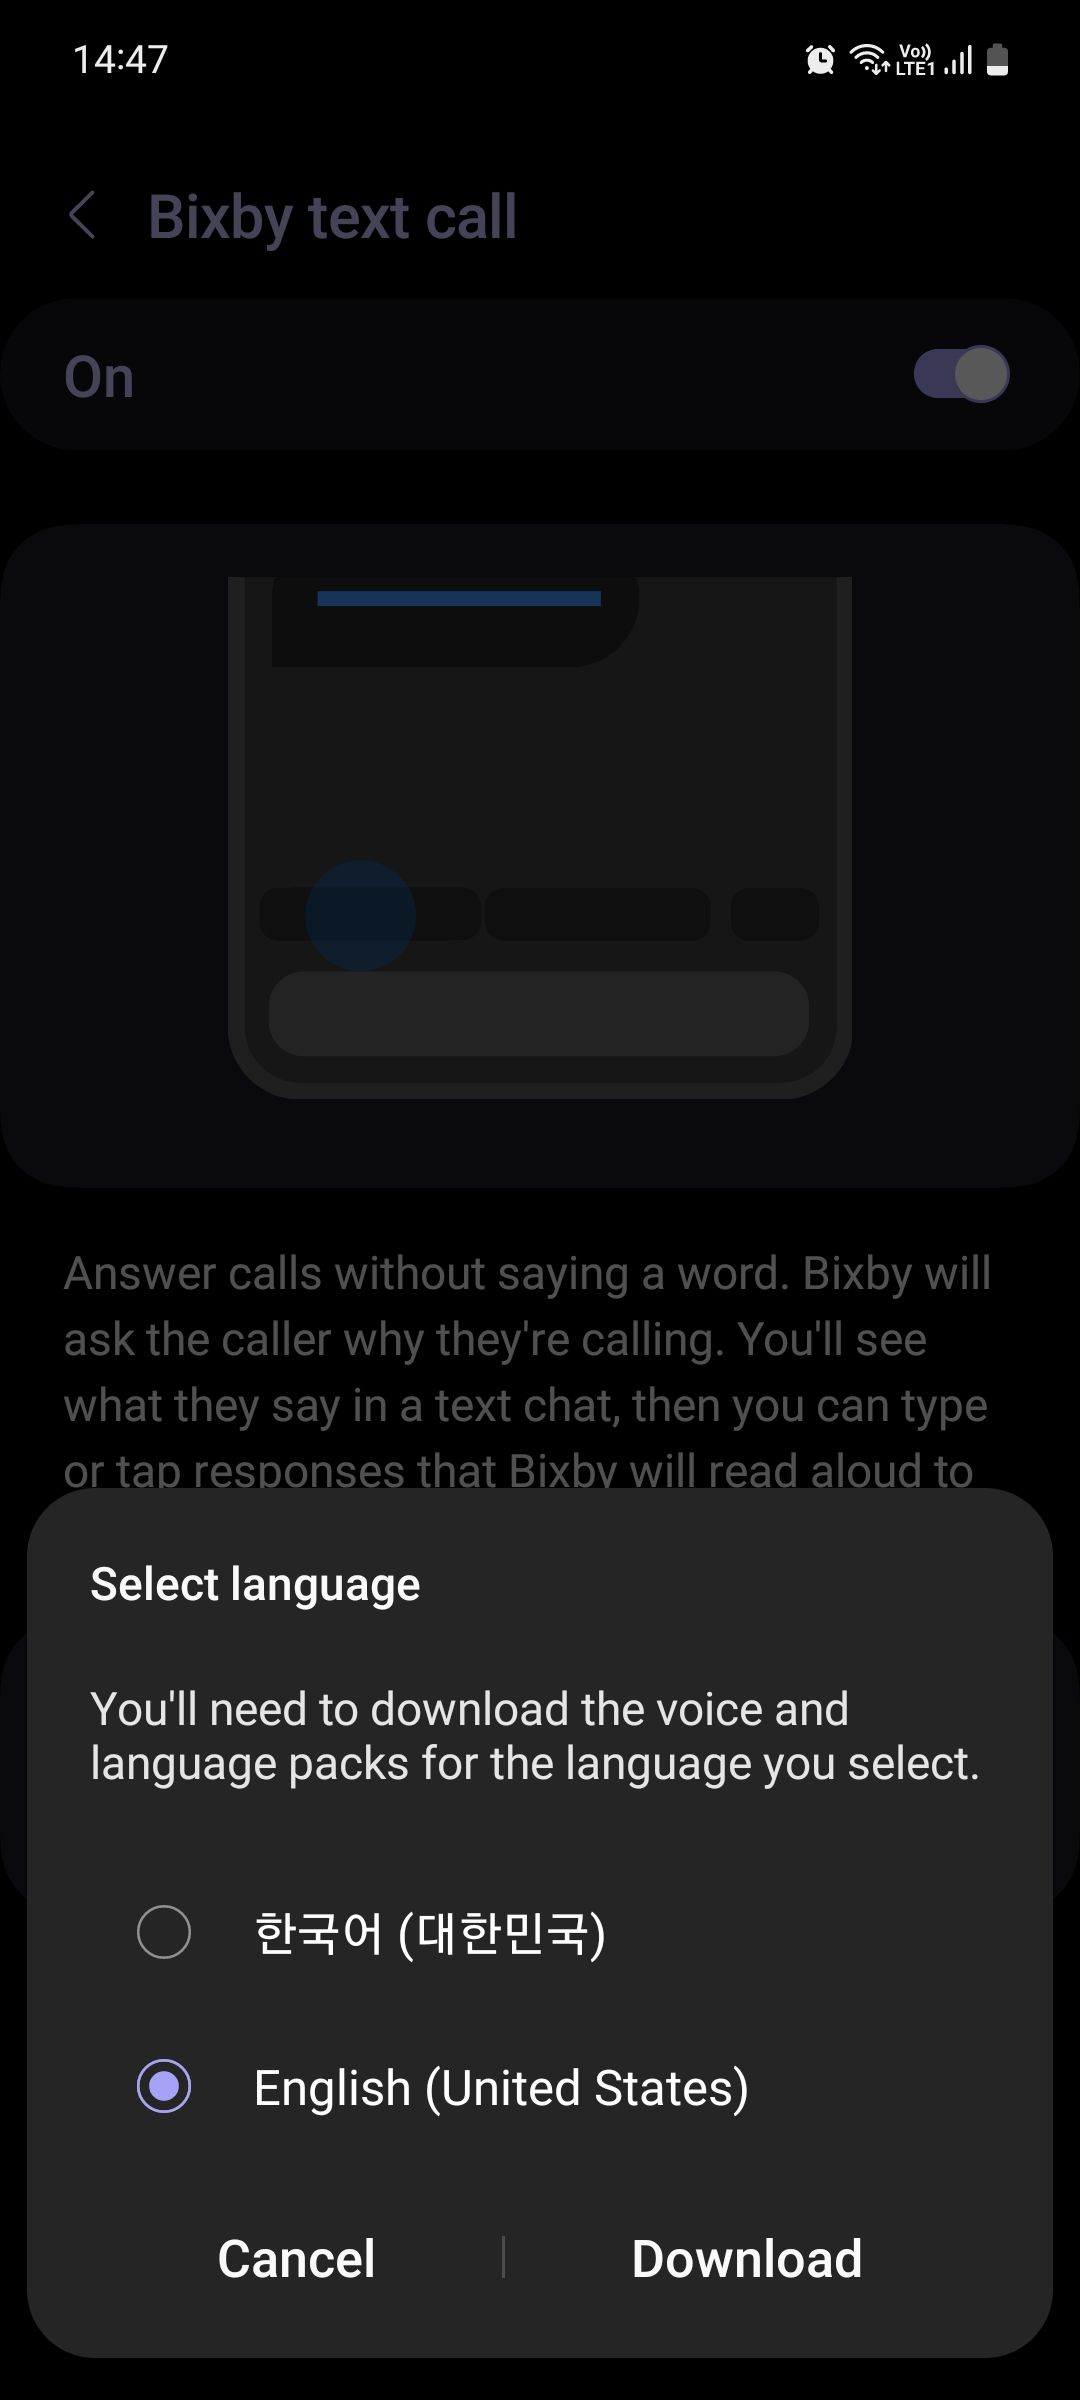 Samsung Phone app select language for Bixby Text Call